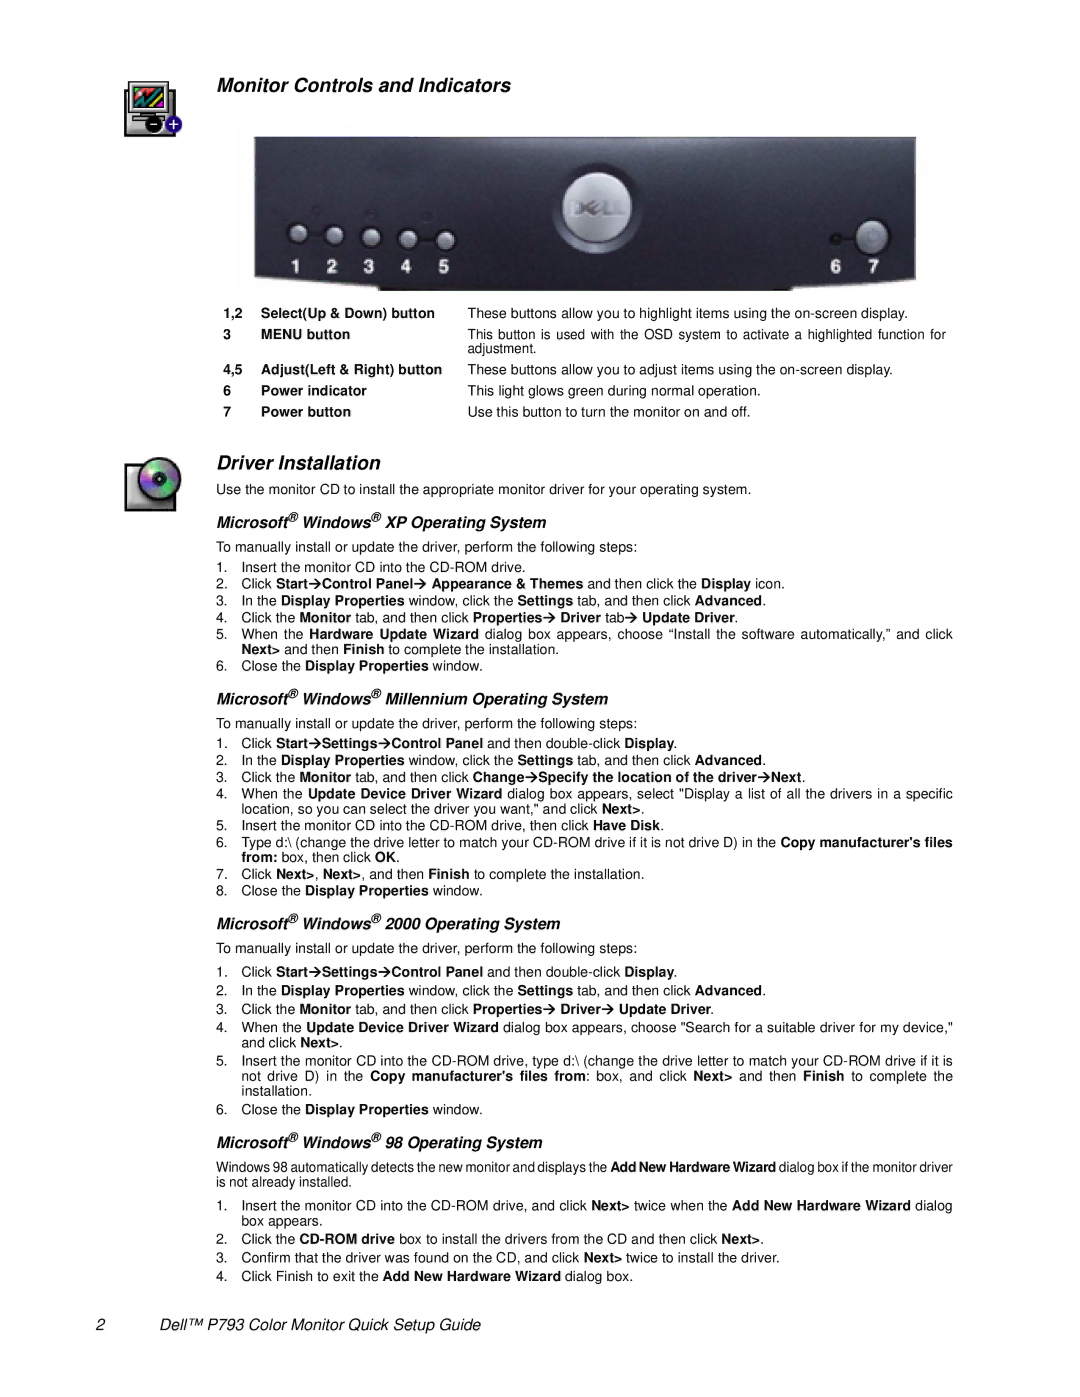 Dell P793 setup guide Monitor Controls and Indicators, Driver Installation 